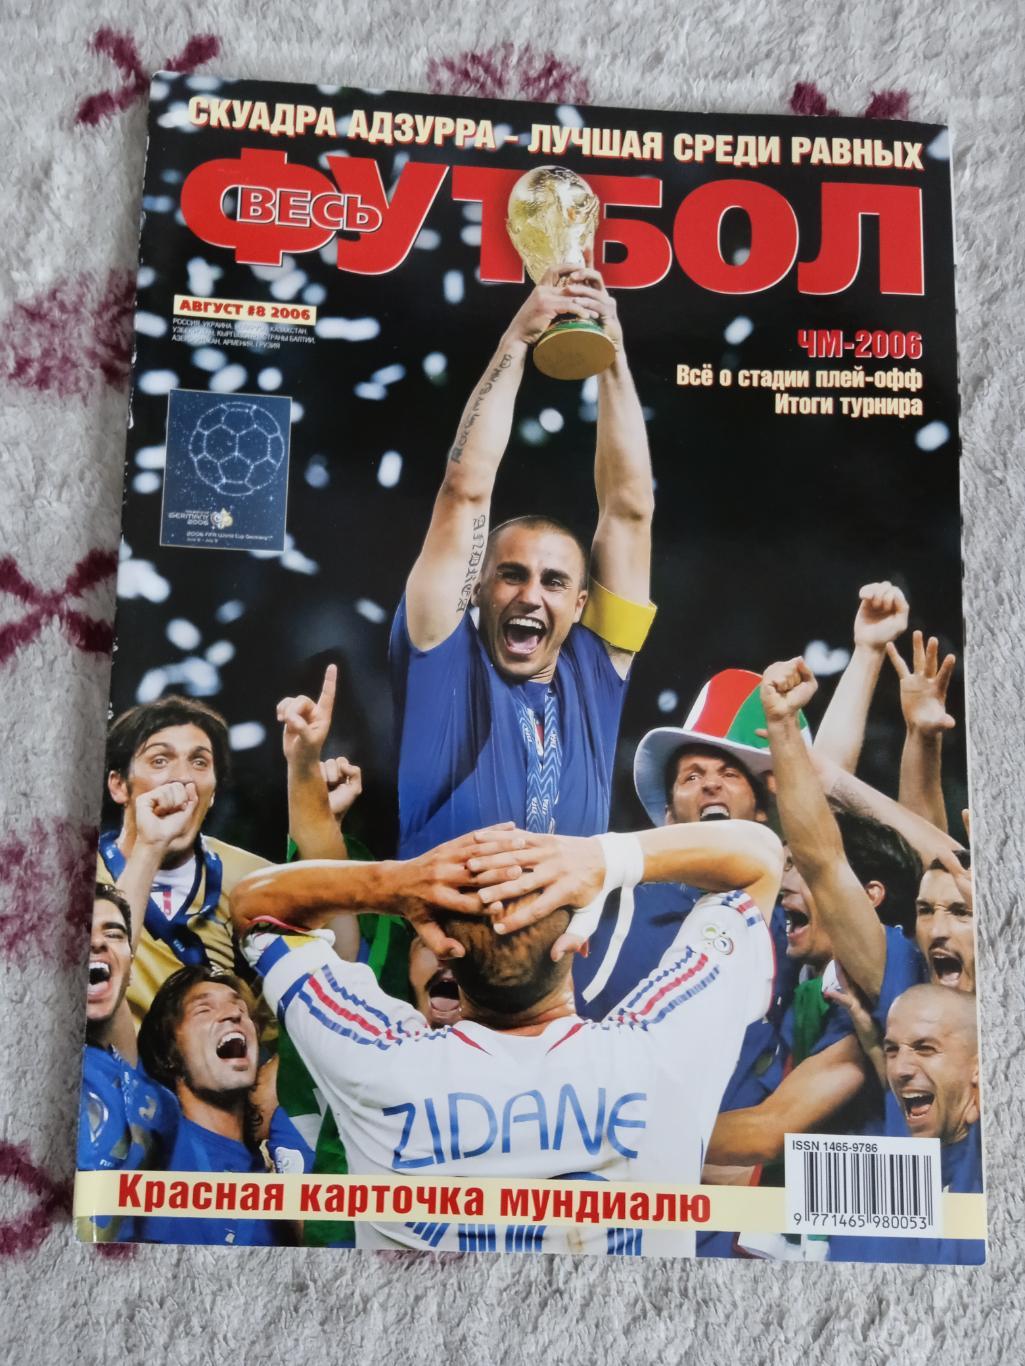 Журнал.Весь футбол № 8 август 2006 г. (ЧМ 2006 Германия).